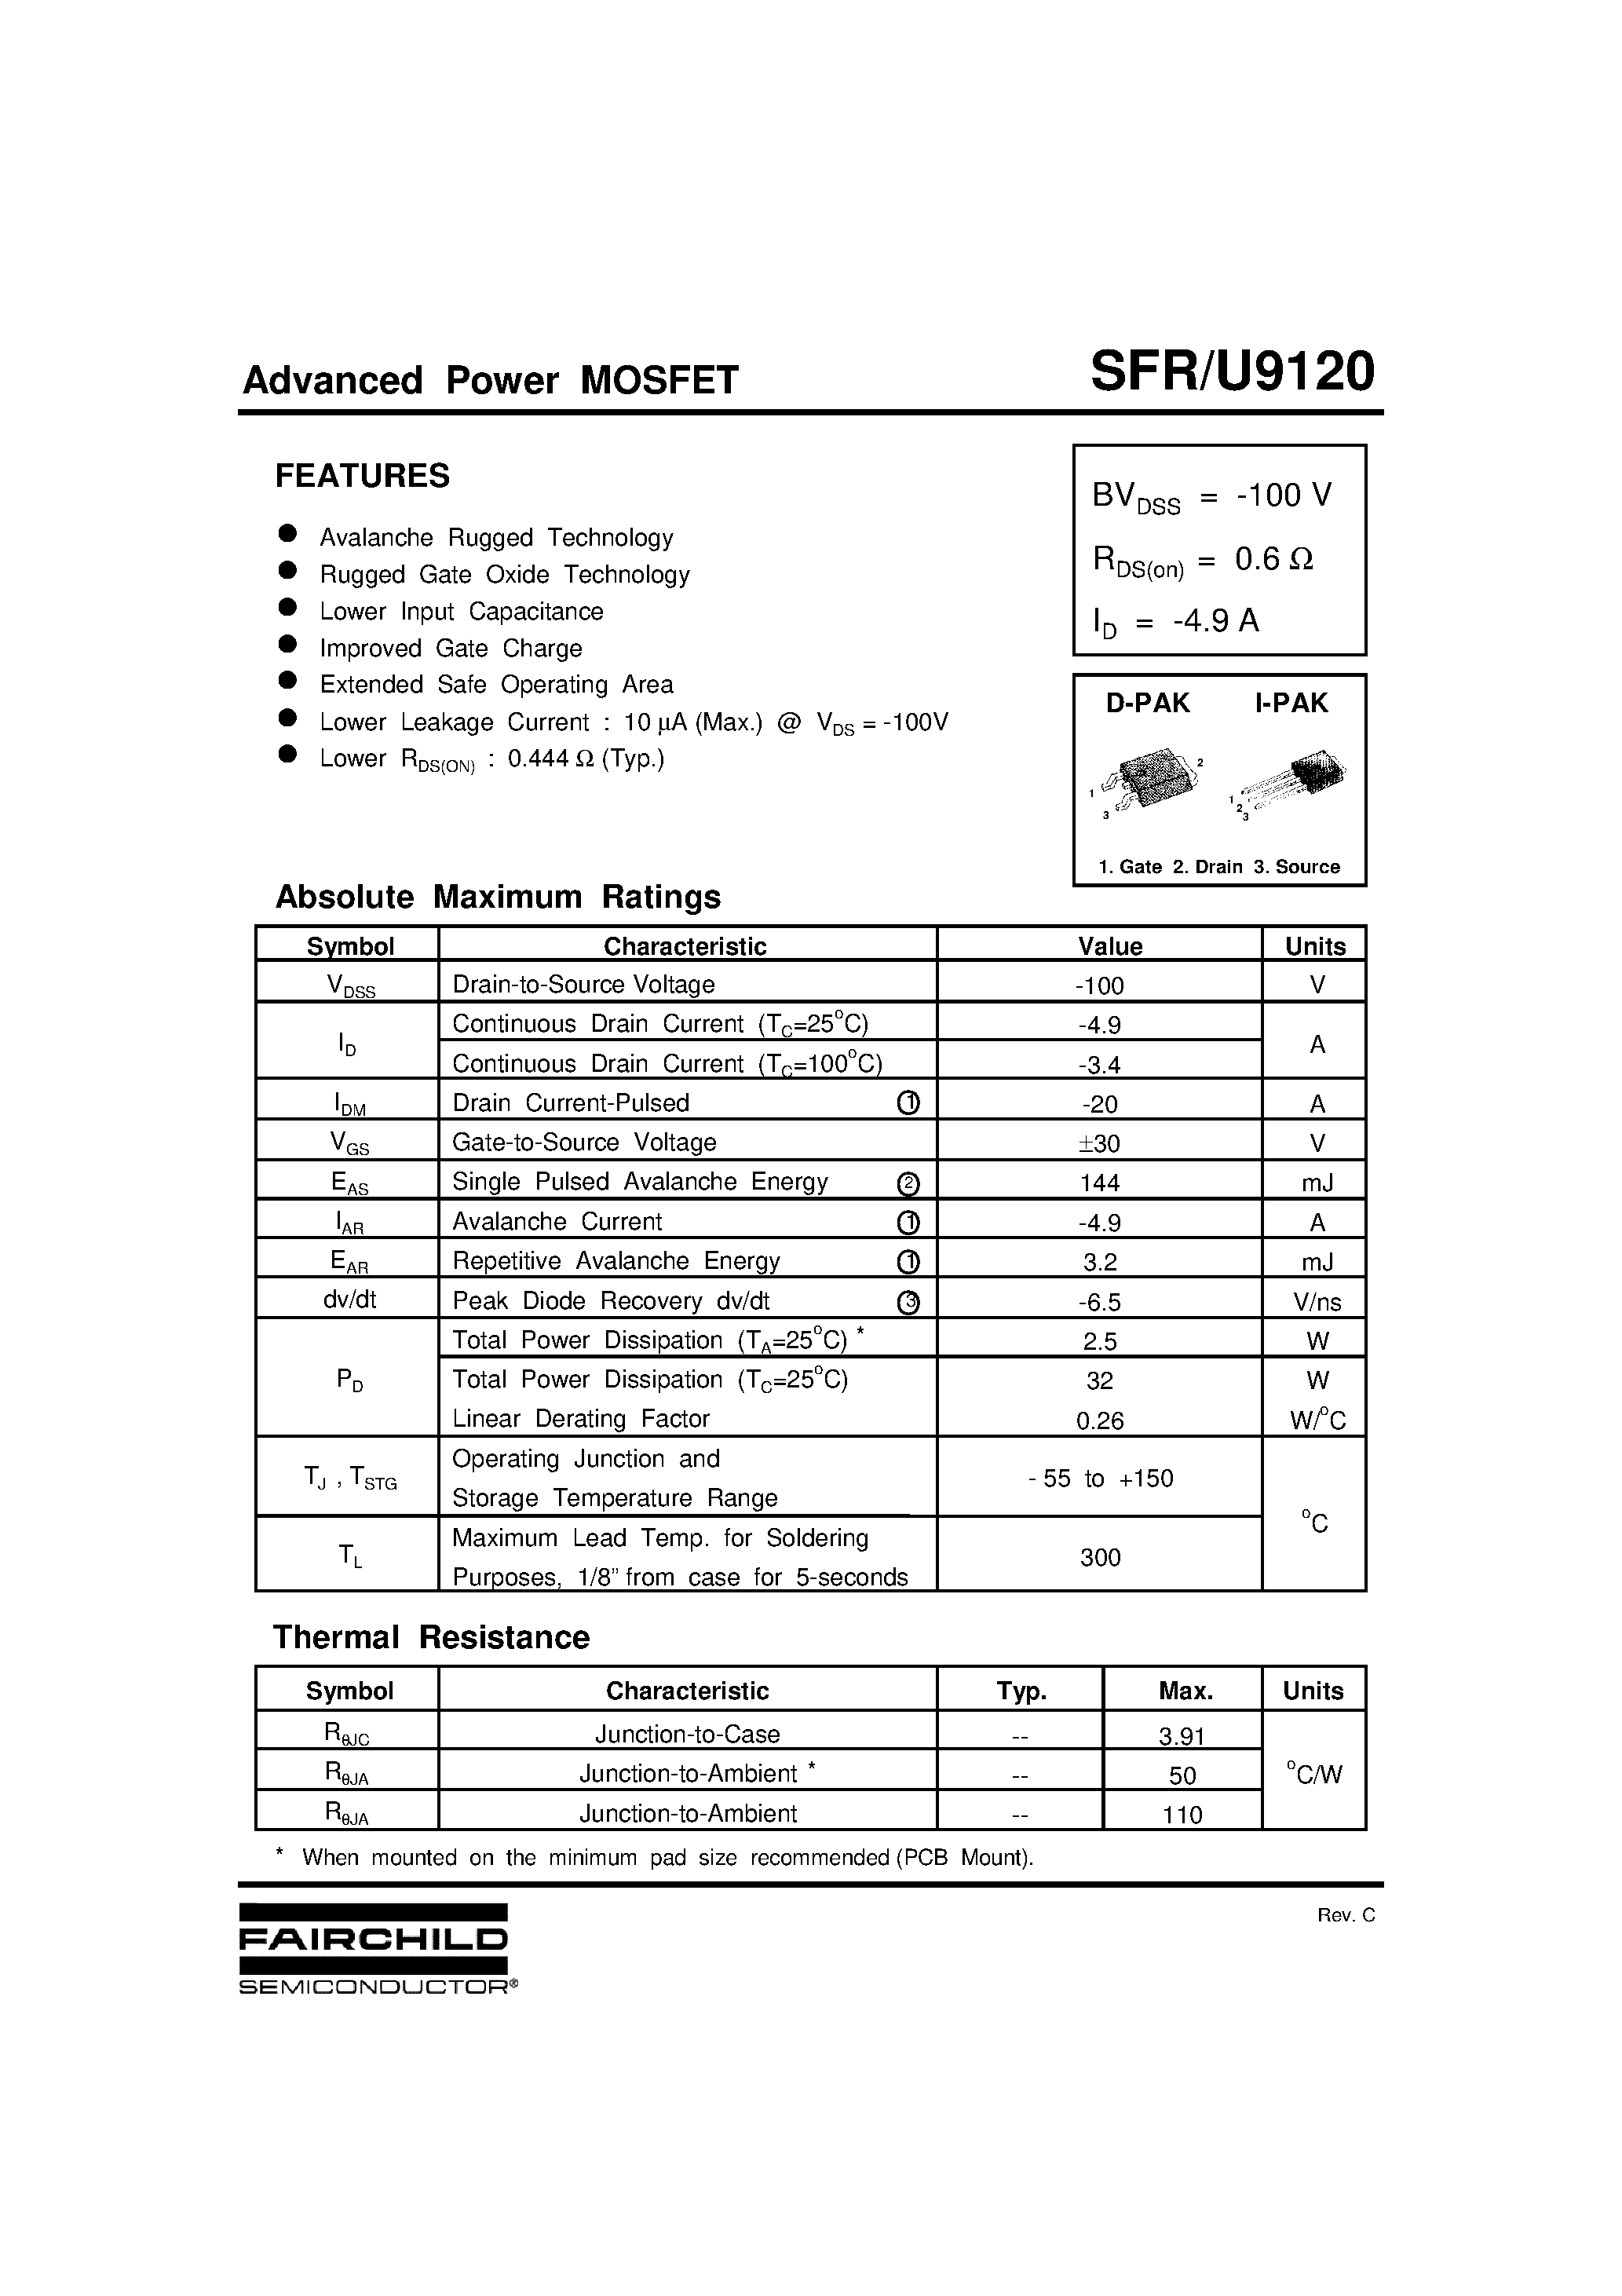 Datasheet SFR/U9120 - Advanced Power MOSFET page 1